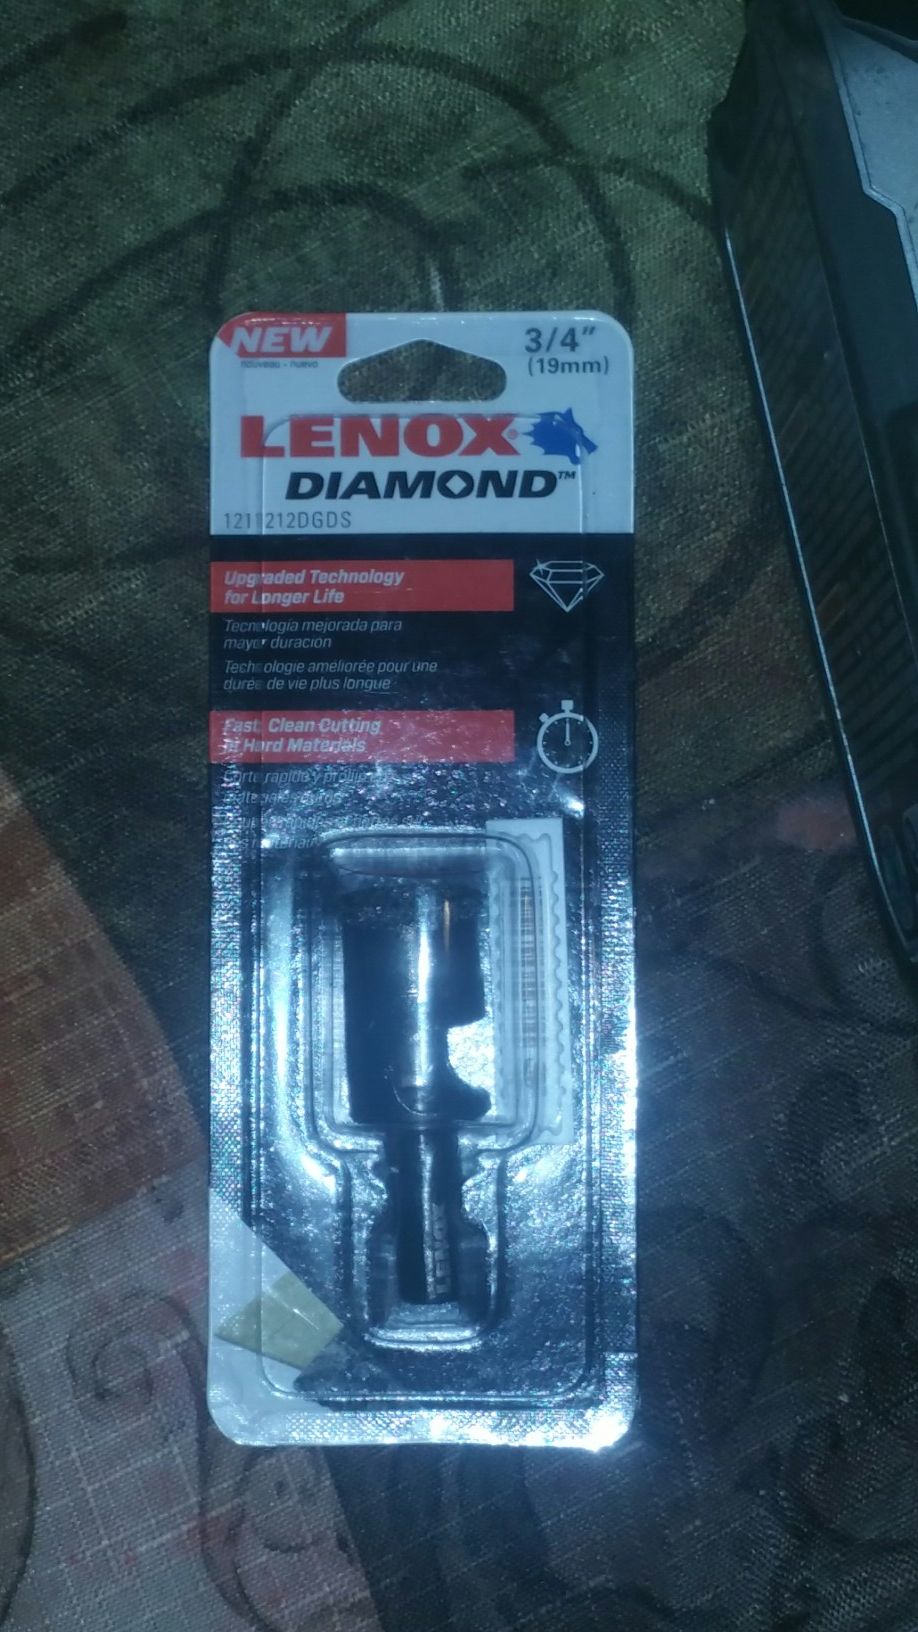 Lenox diamond 3/4"